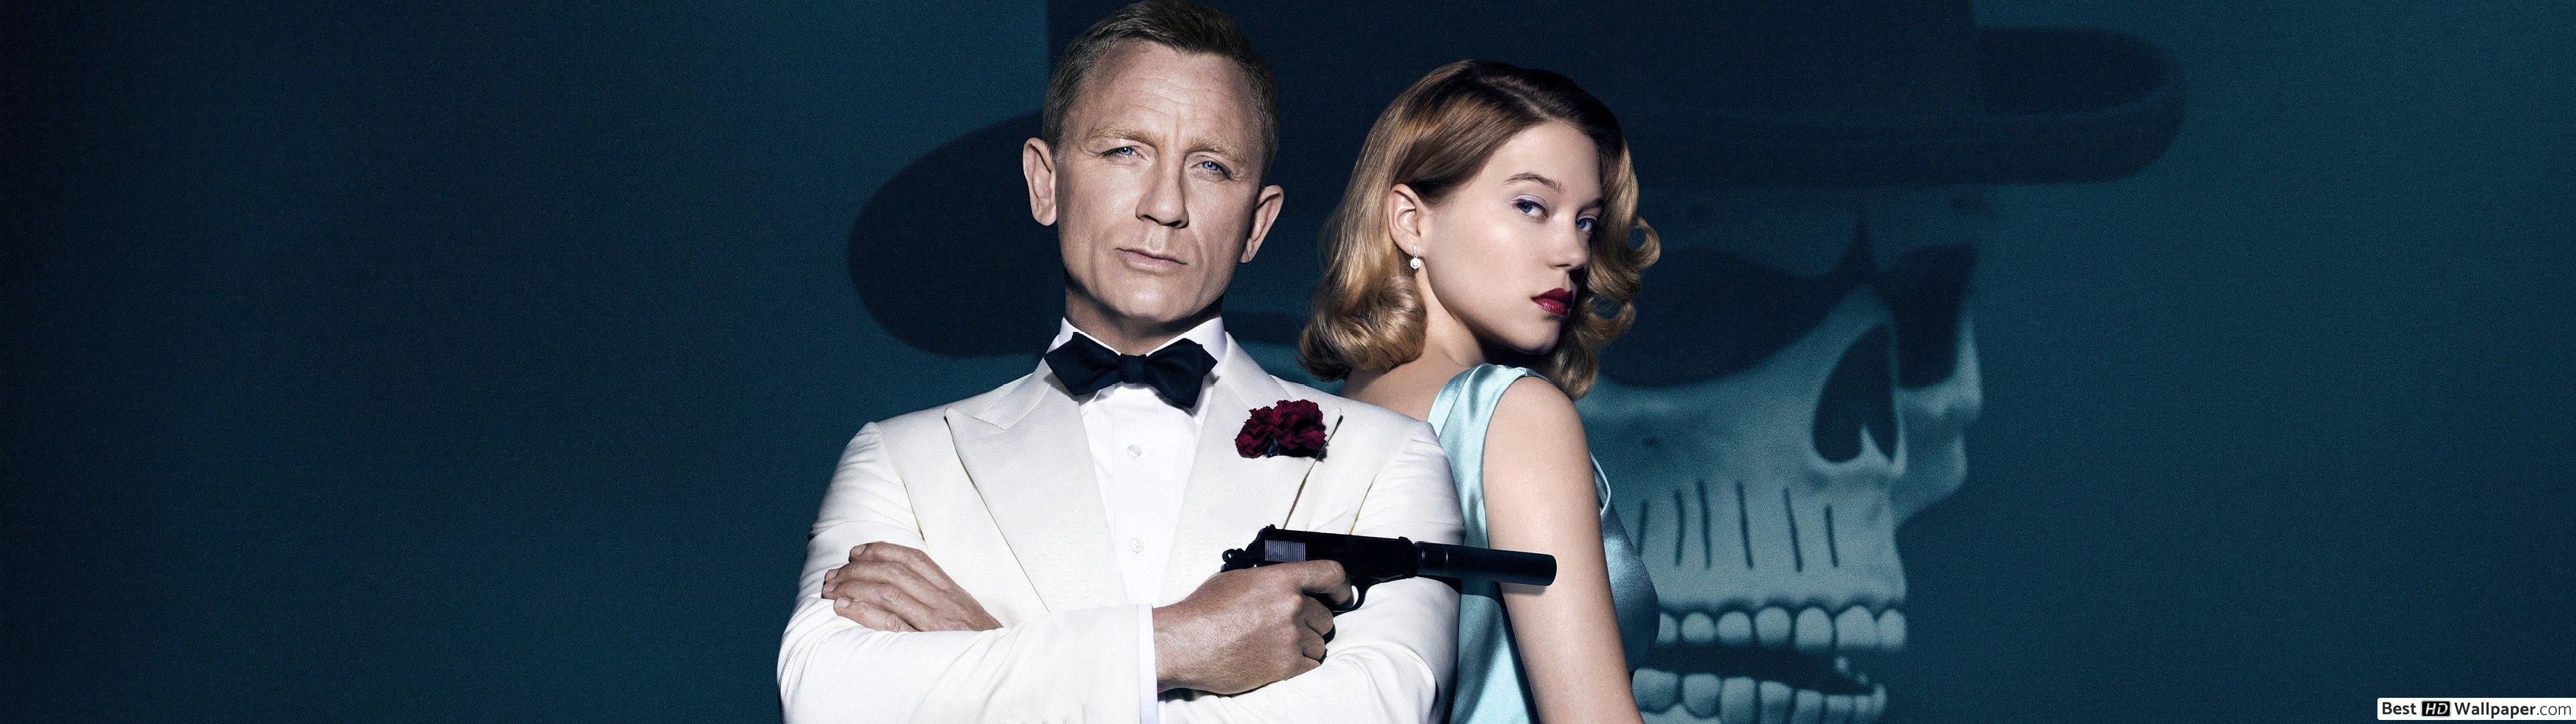 James Bond skull and woman HD wallpaper download